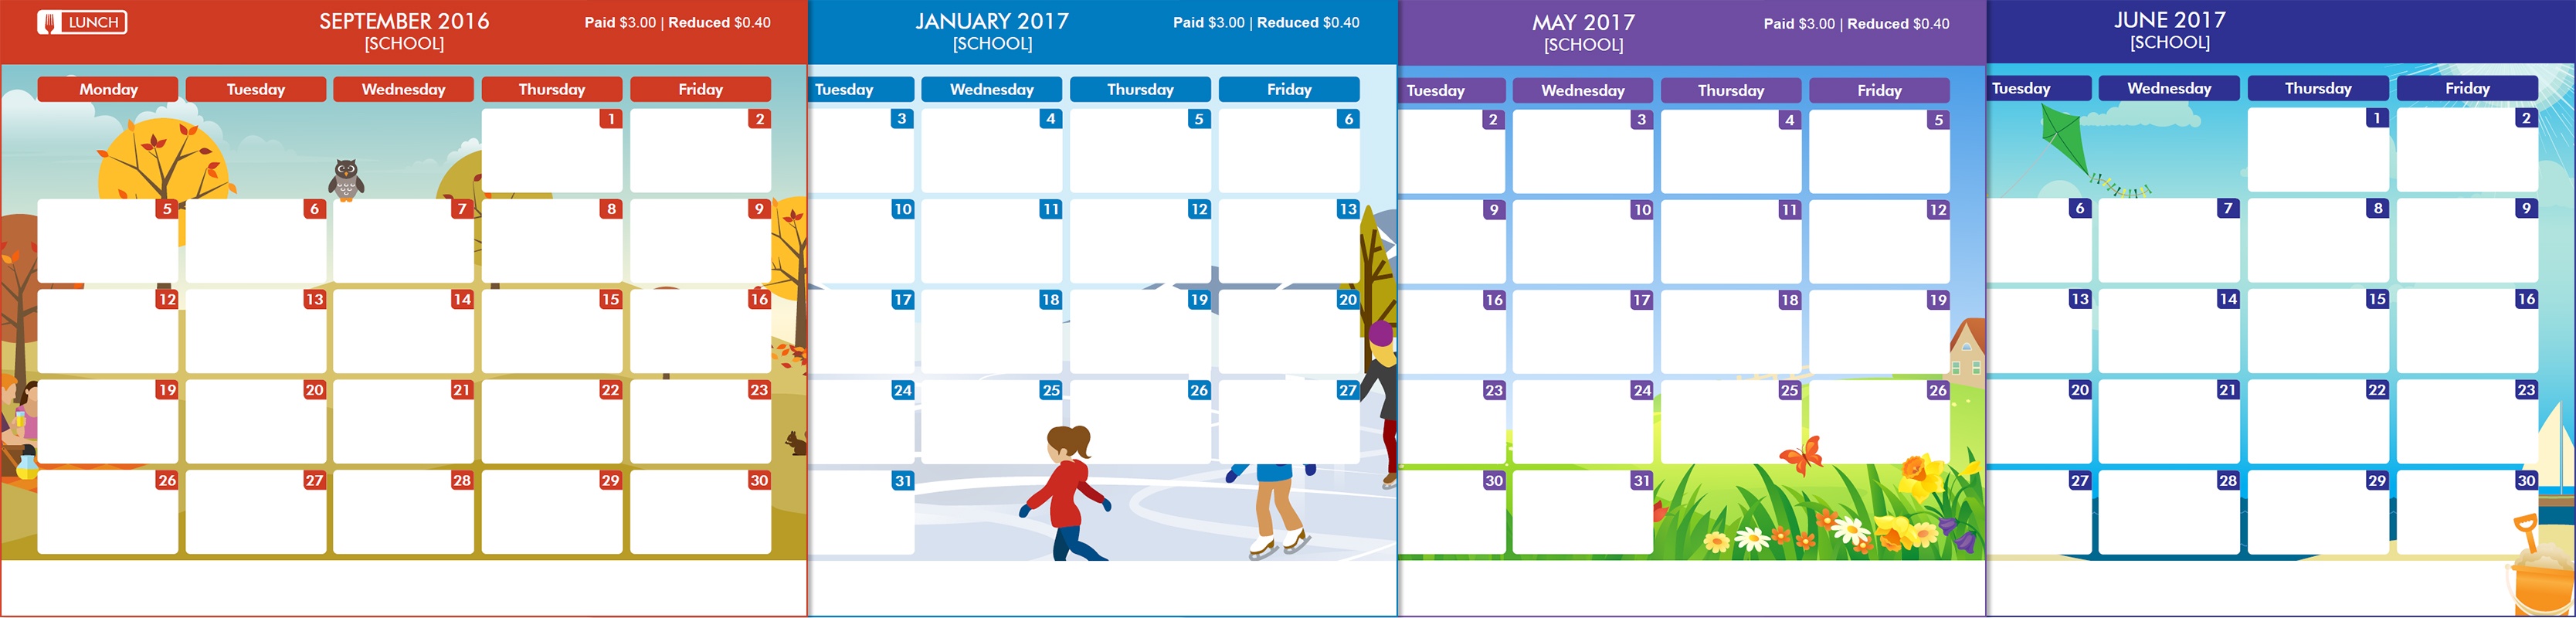 elementary school menu calendar template word